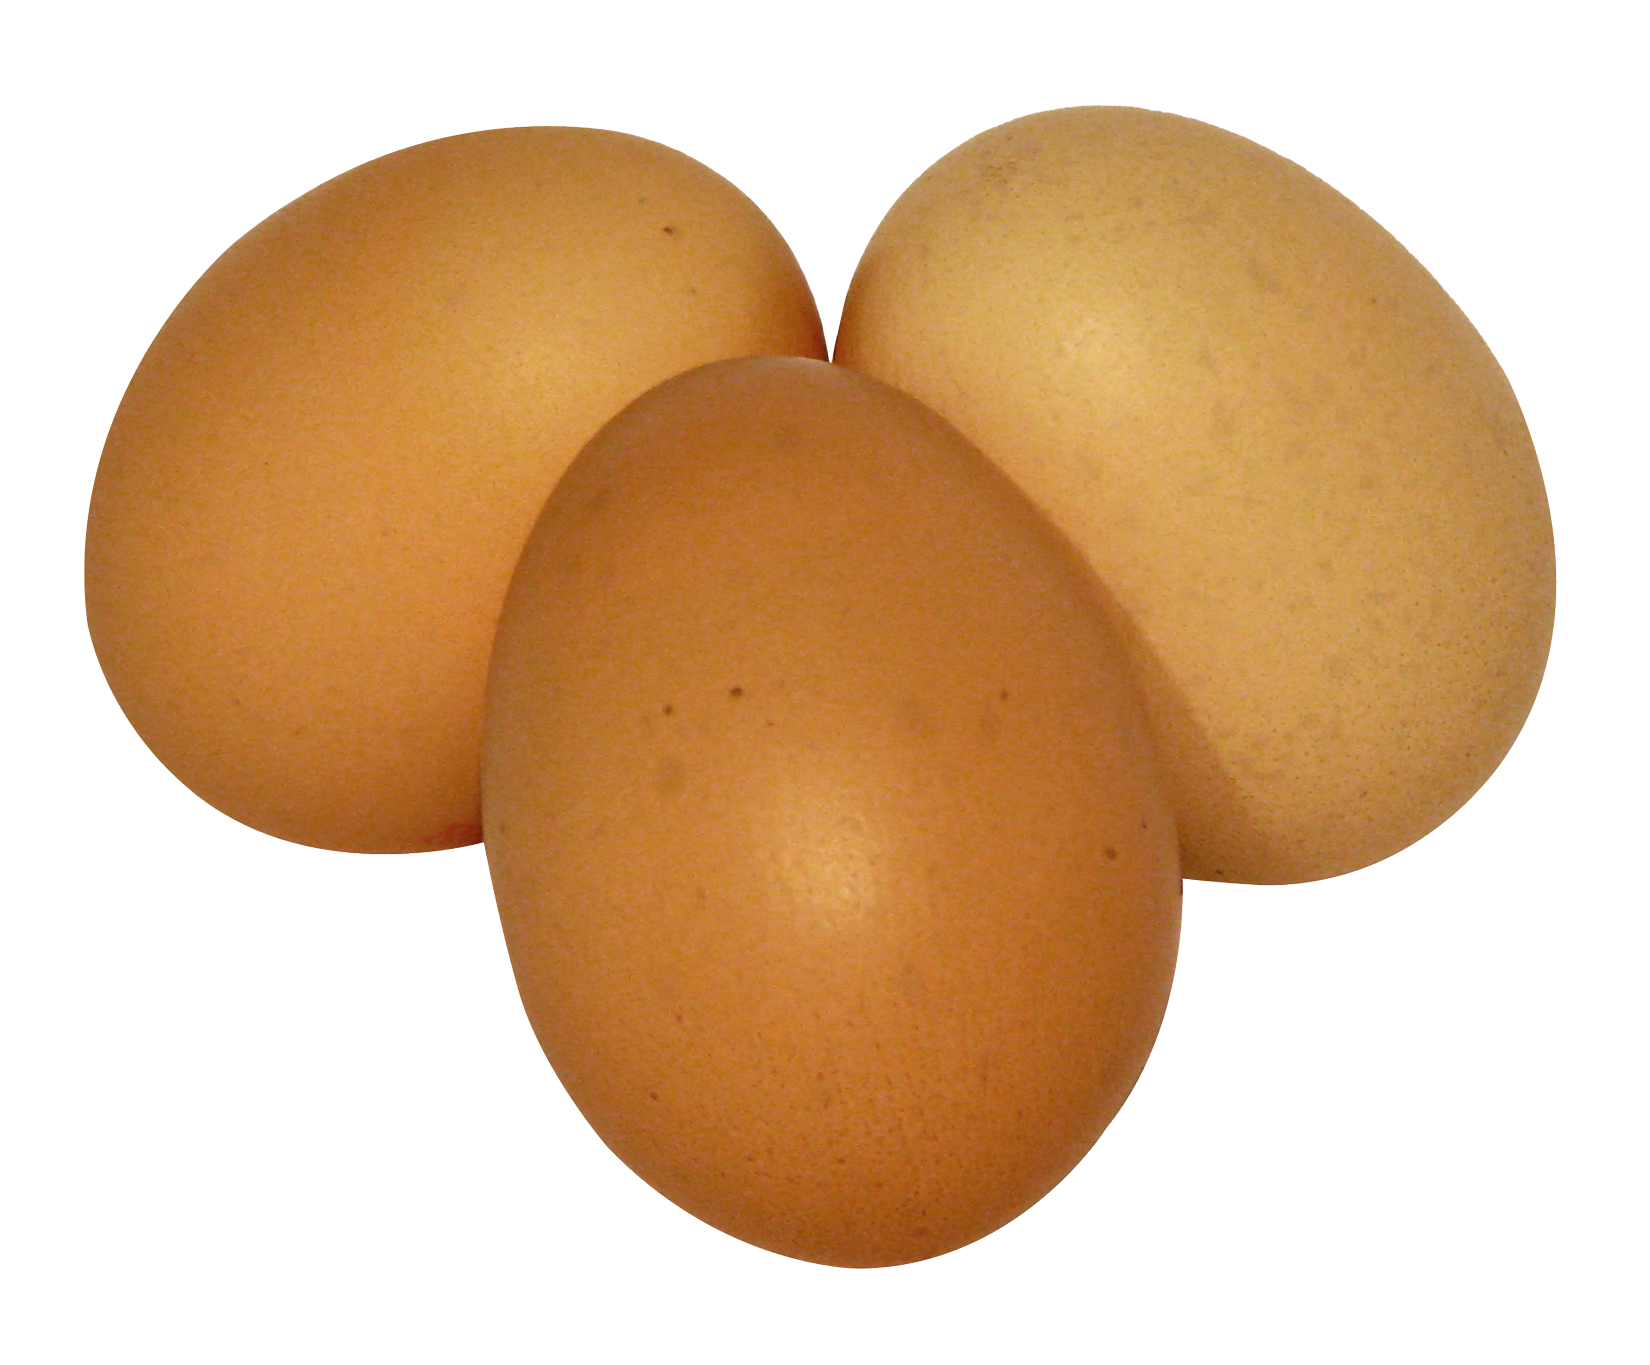 Egg PNG Transparent Images Free Download - Pngfre